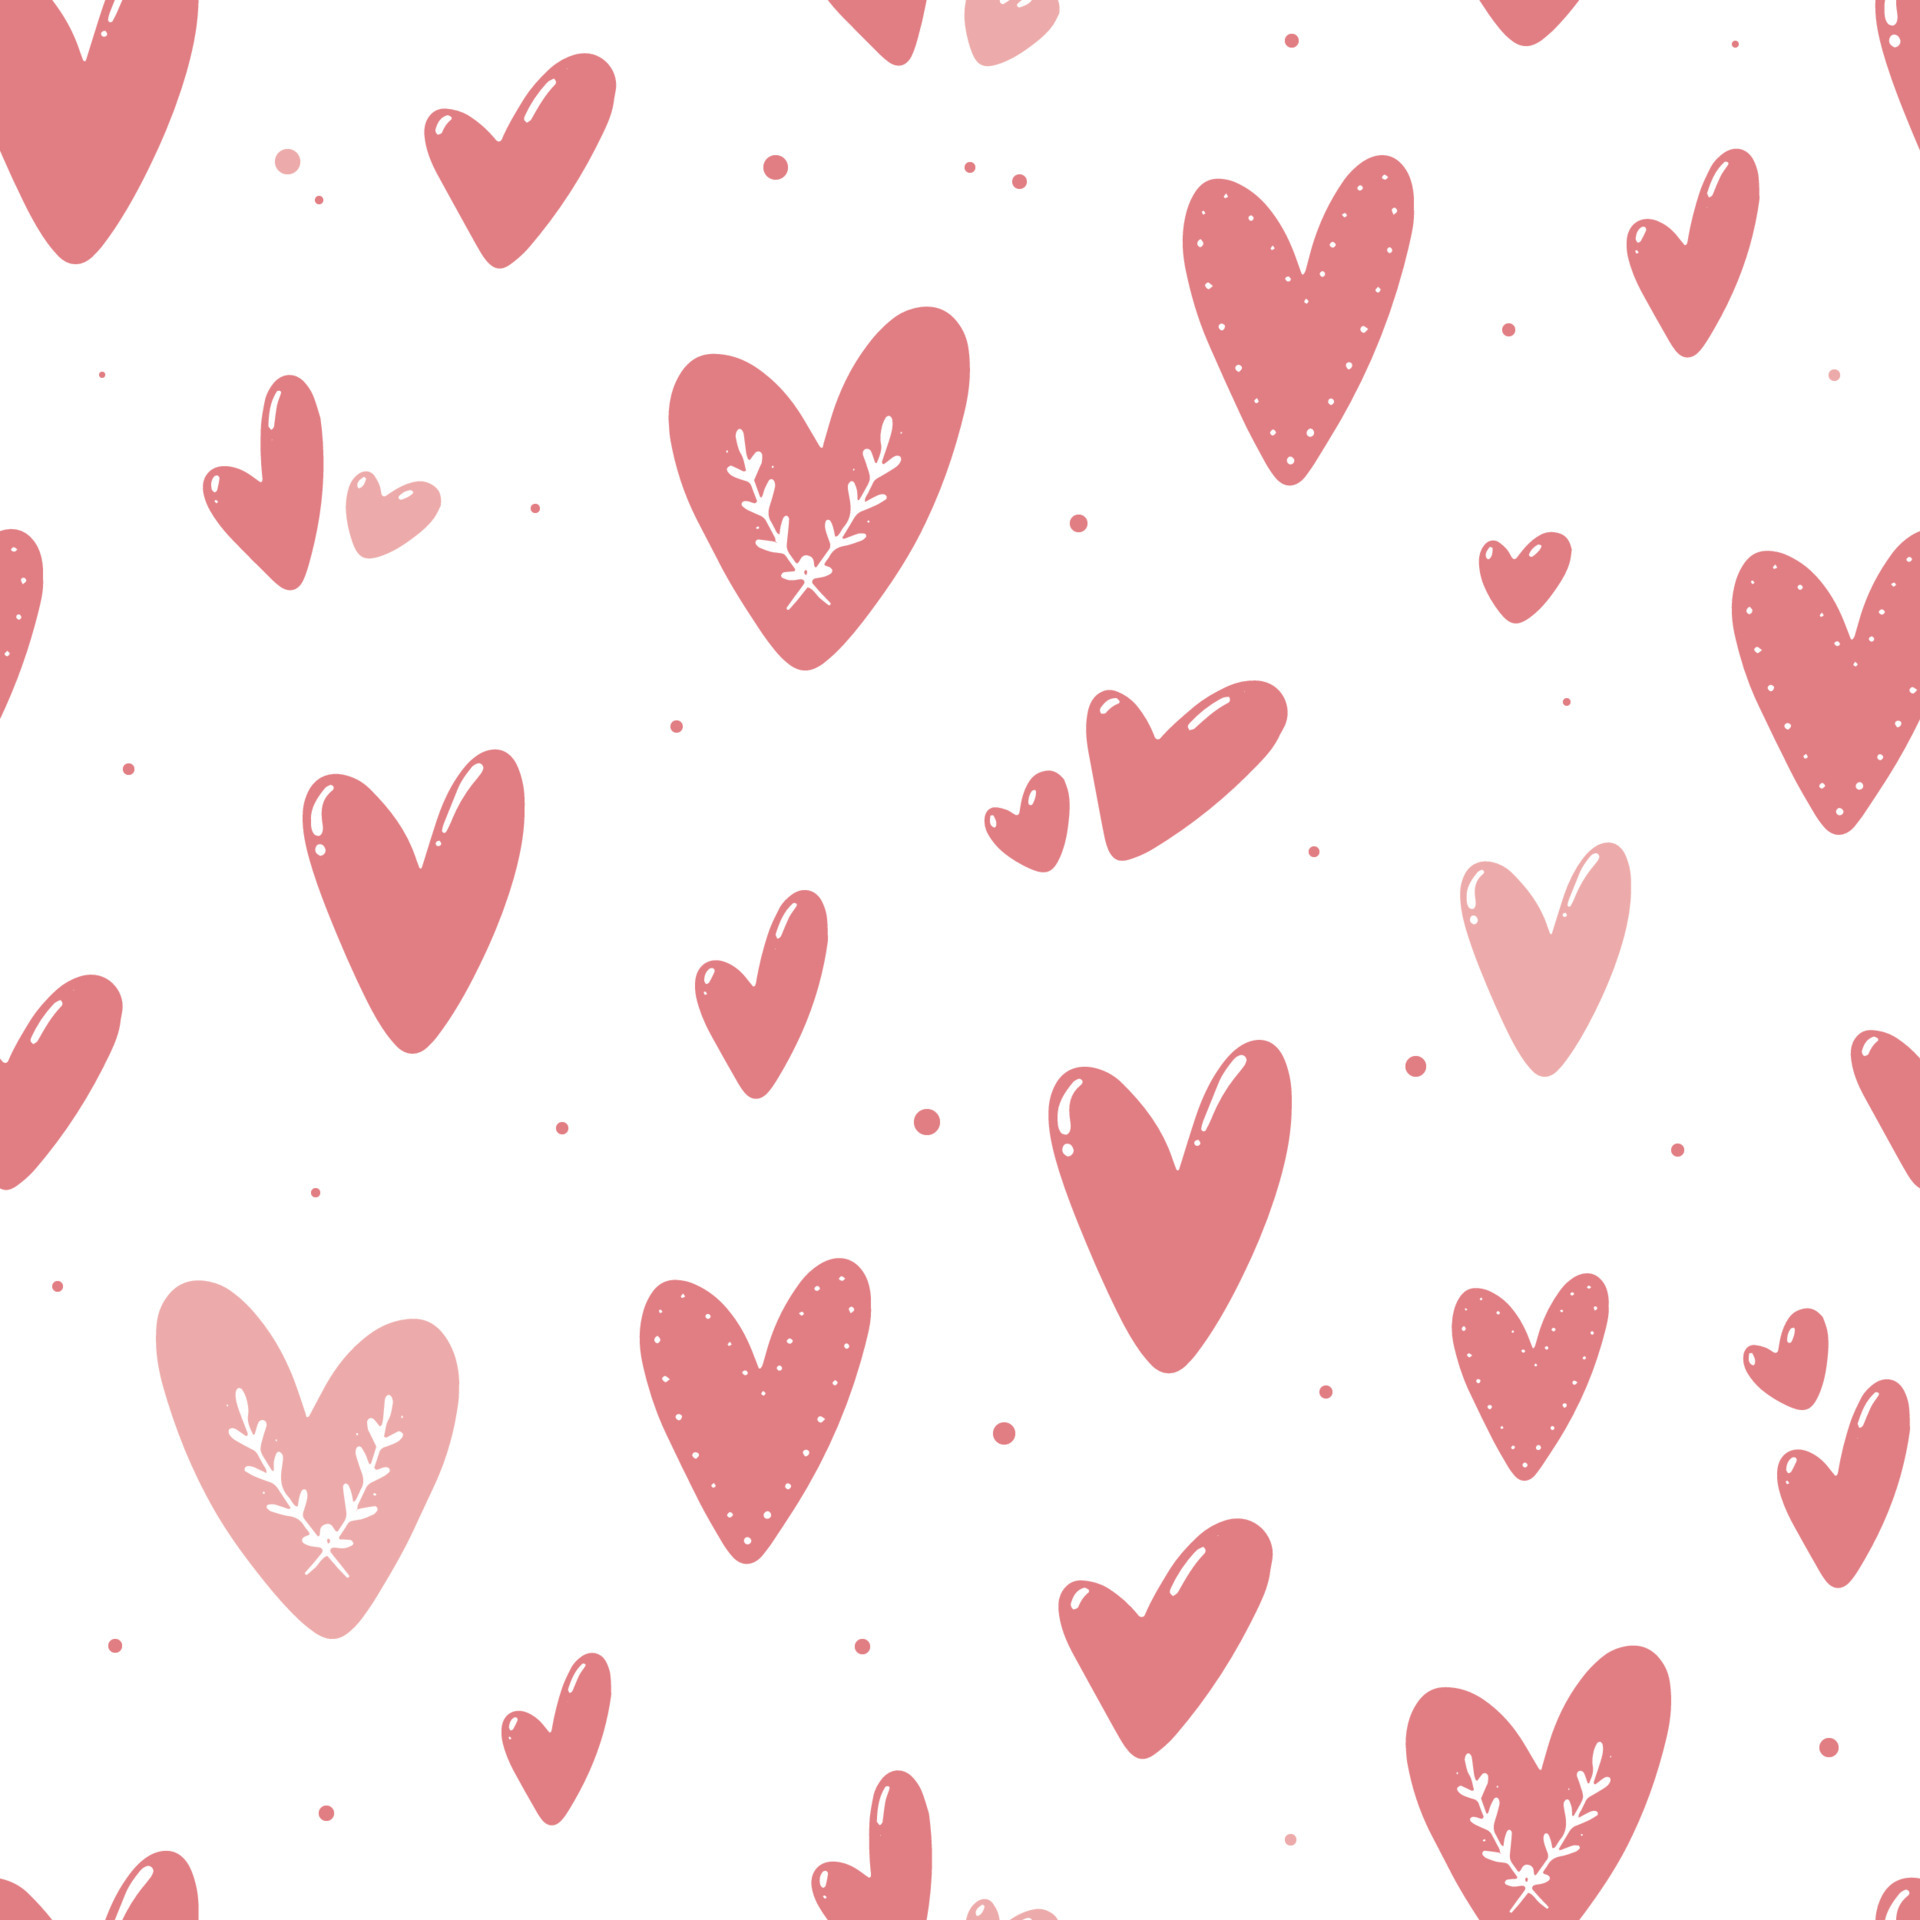 cute happy valentines day tumblr